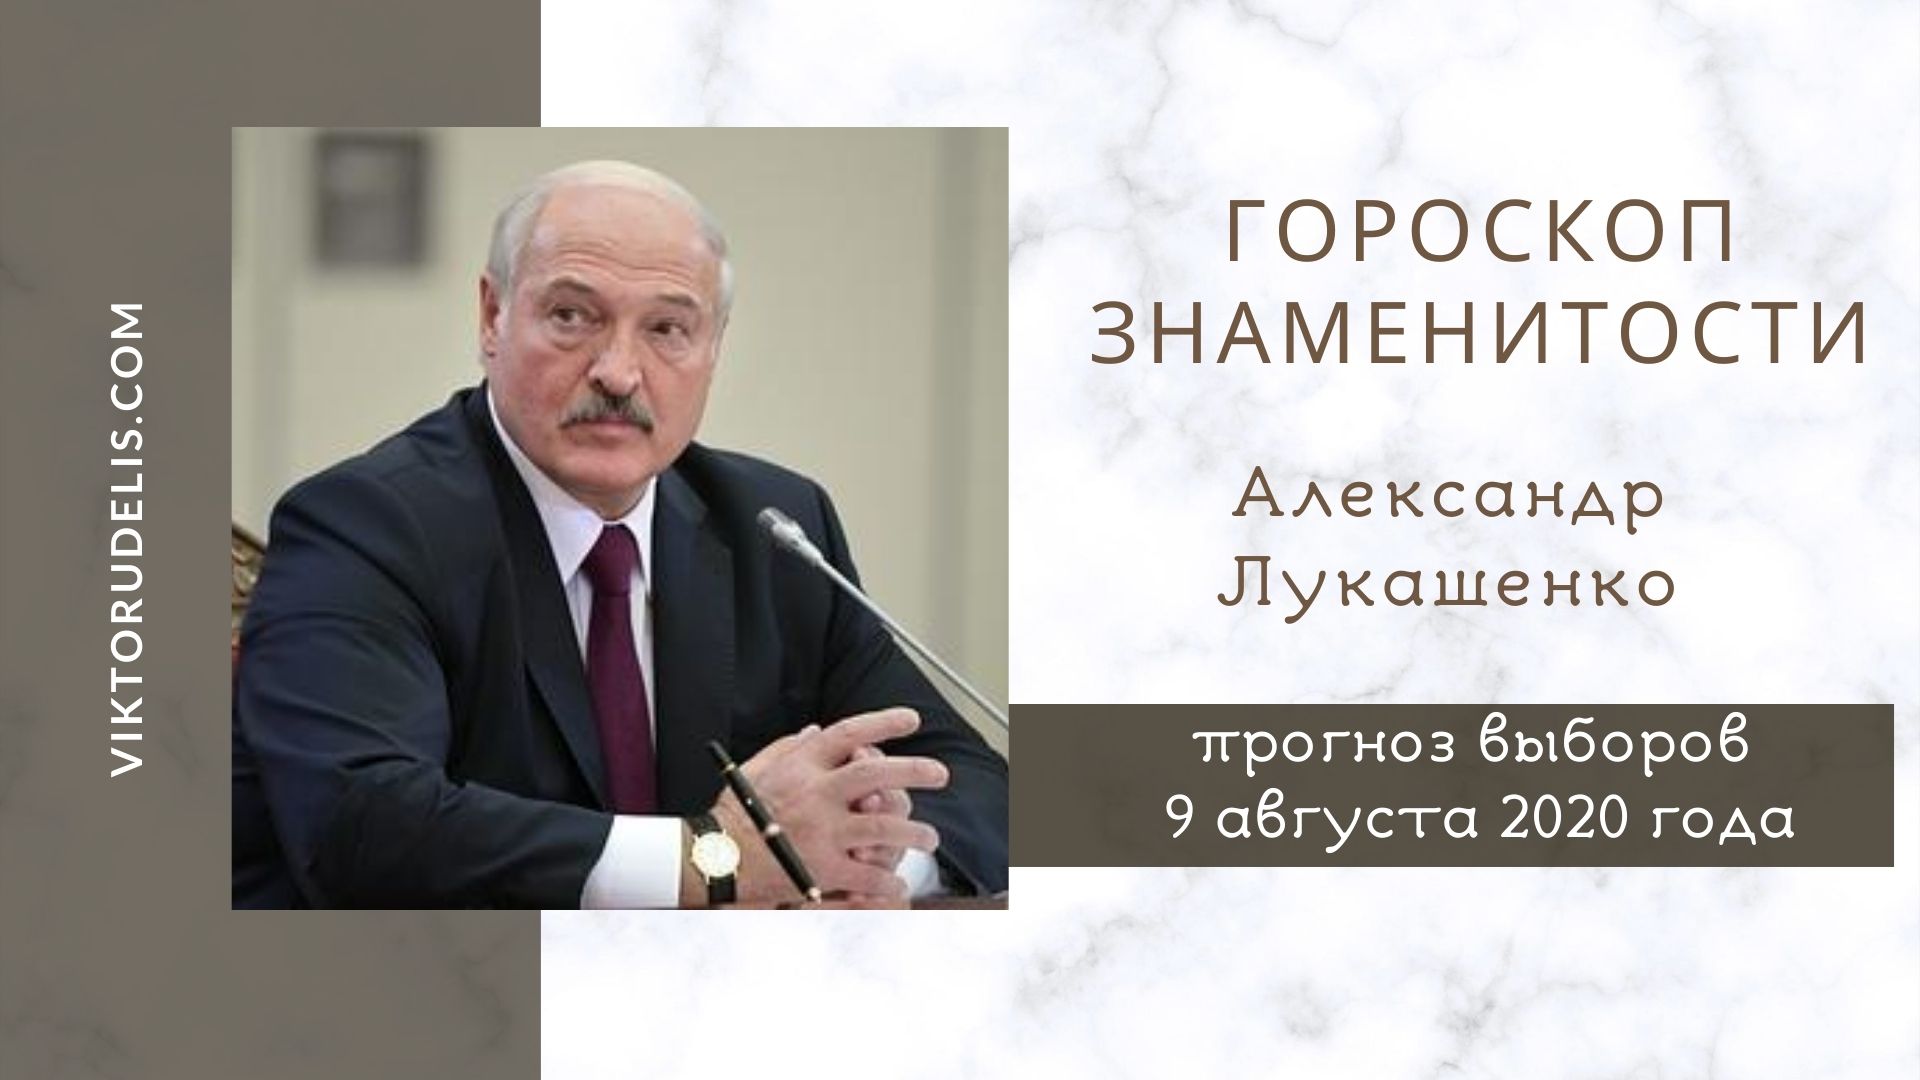 Прогноз Астролог Лукашенко